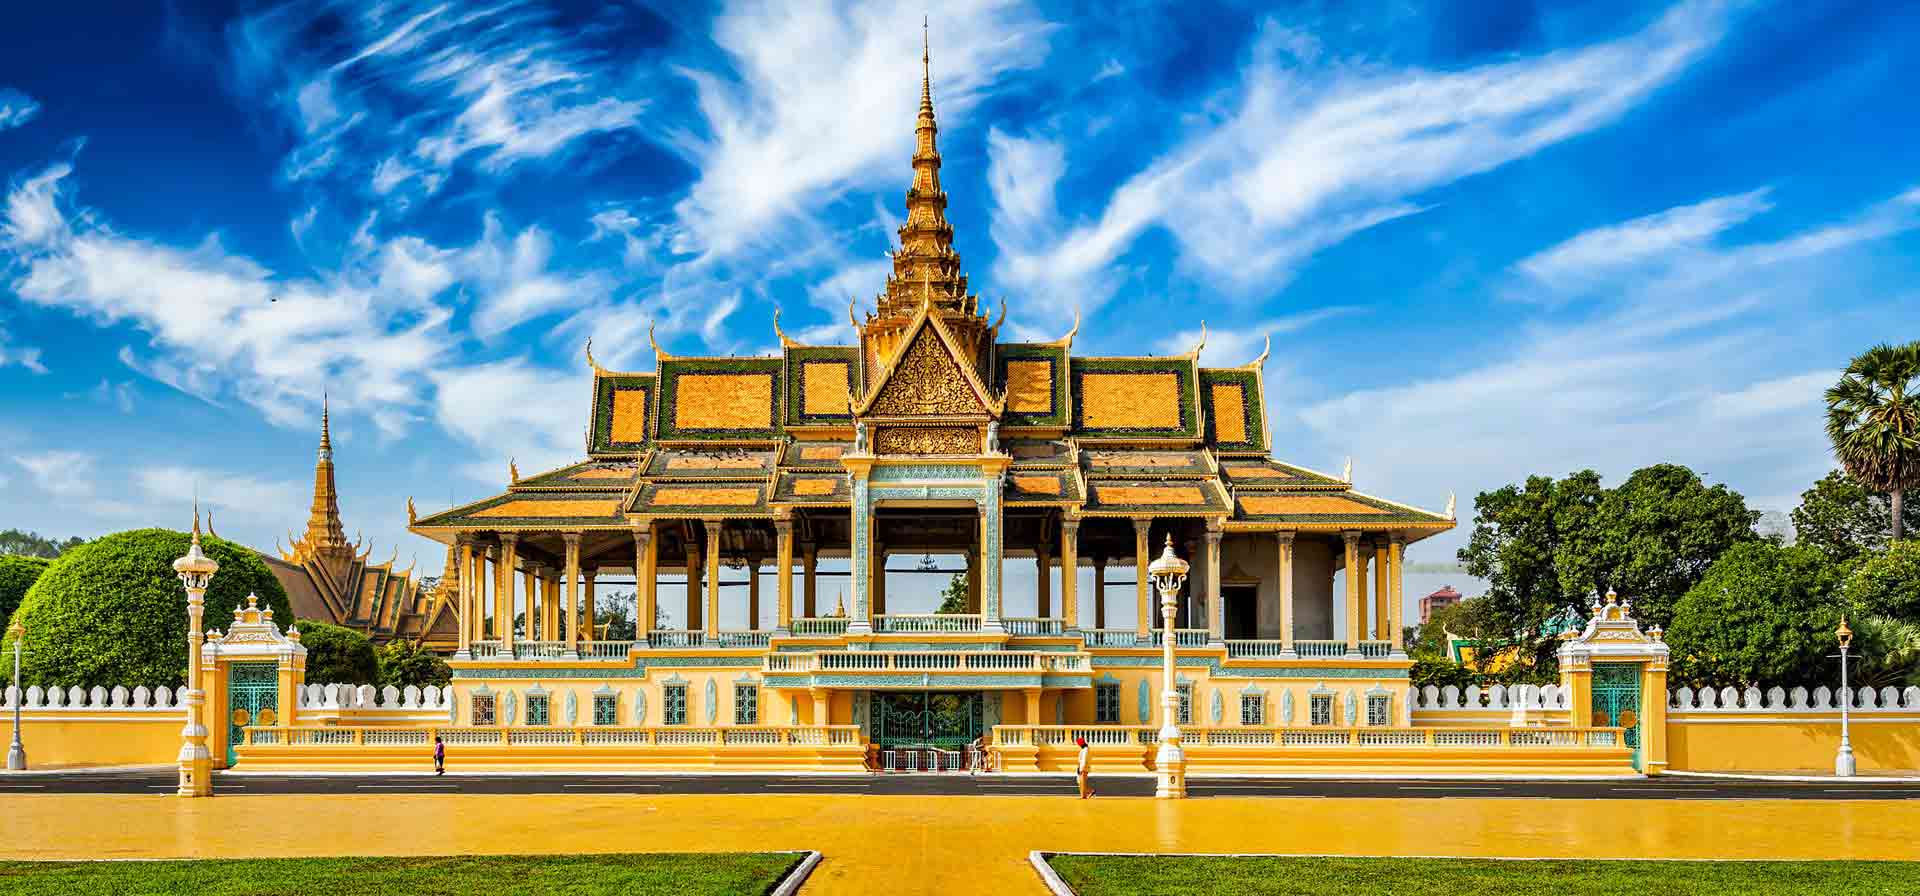 Phnom penh, cambodia: one day tourist itinerary |